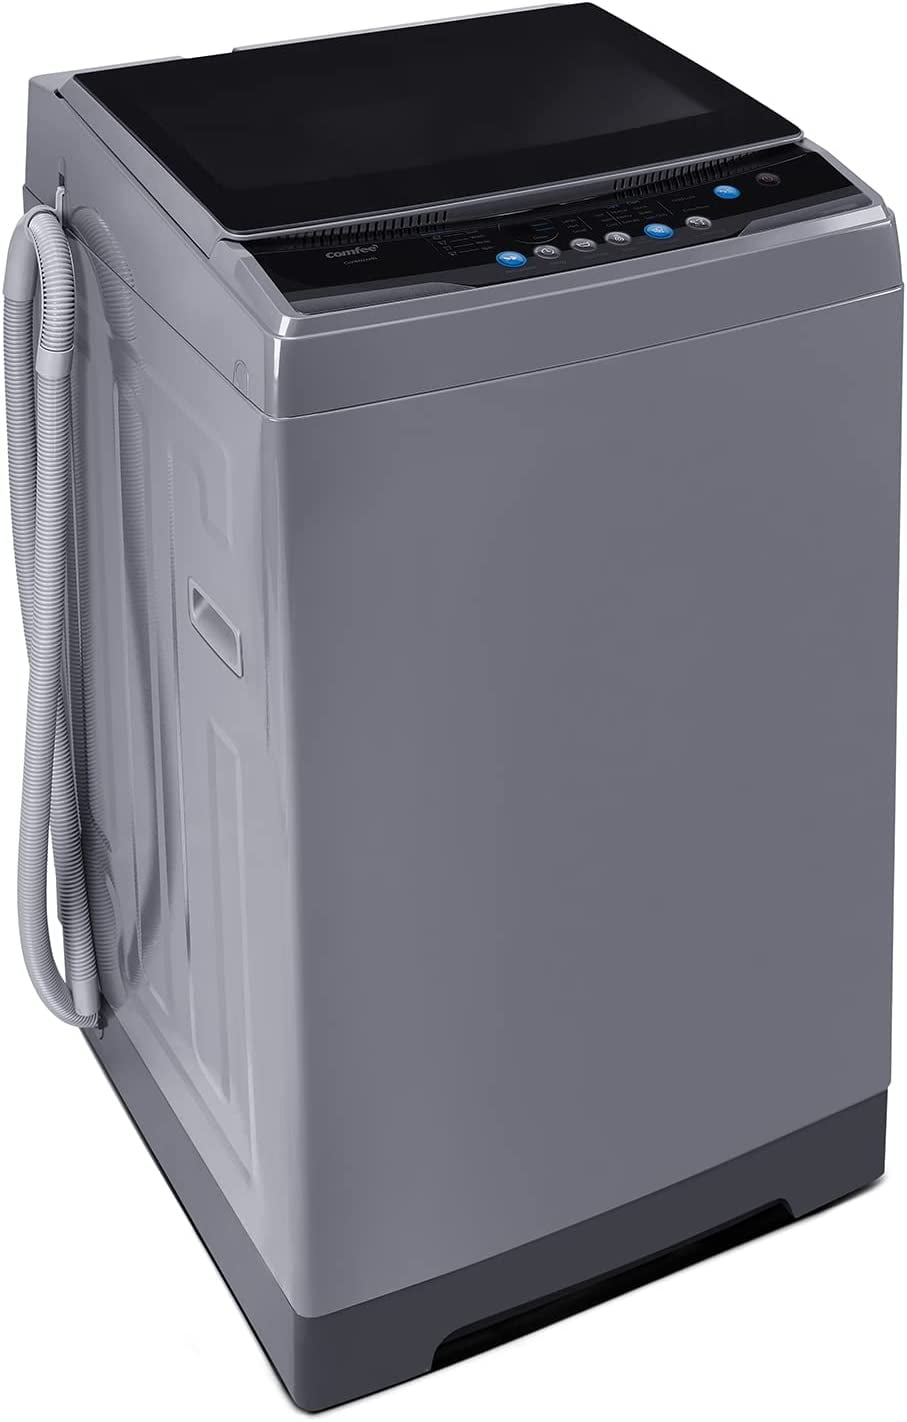 COMFEE' Washing Machine 2.4 Cu.ft LED Portable Washin Environmentally  Friendly, Child Lock for RV, Dorm